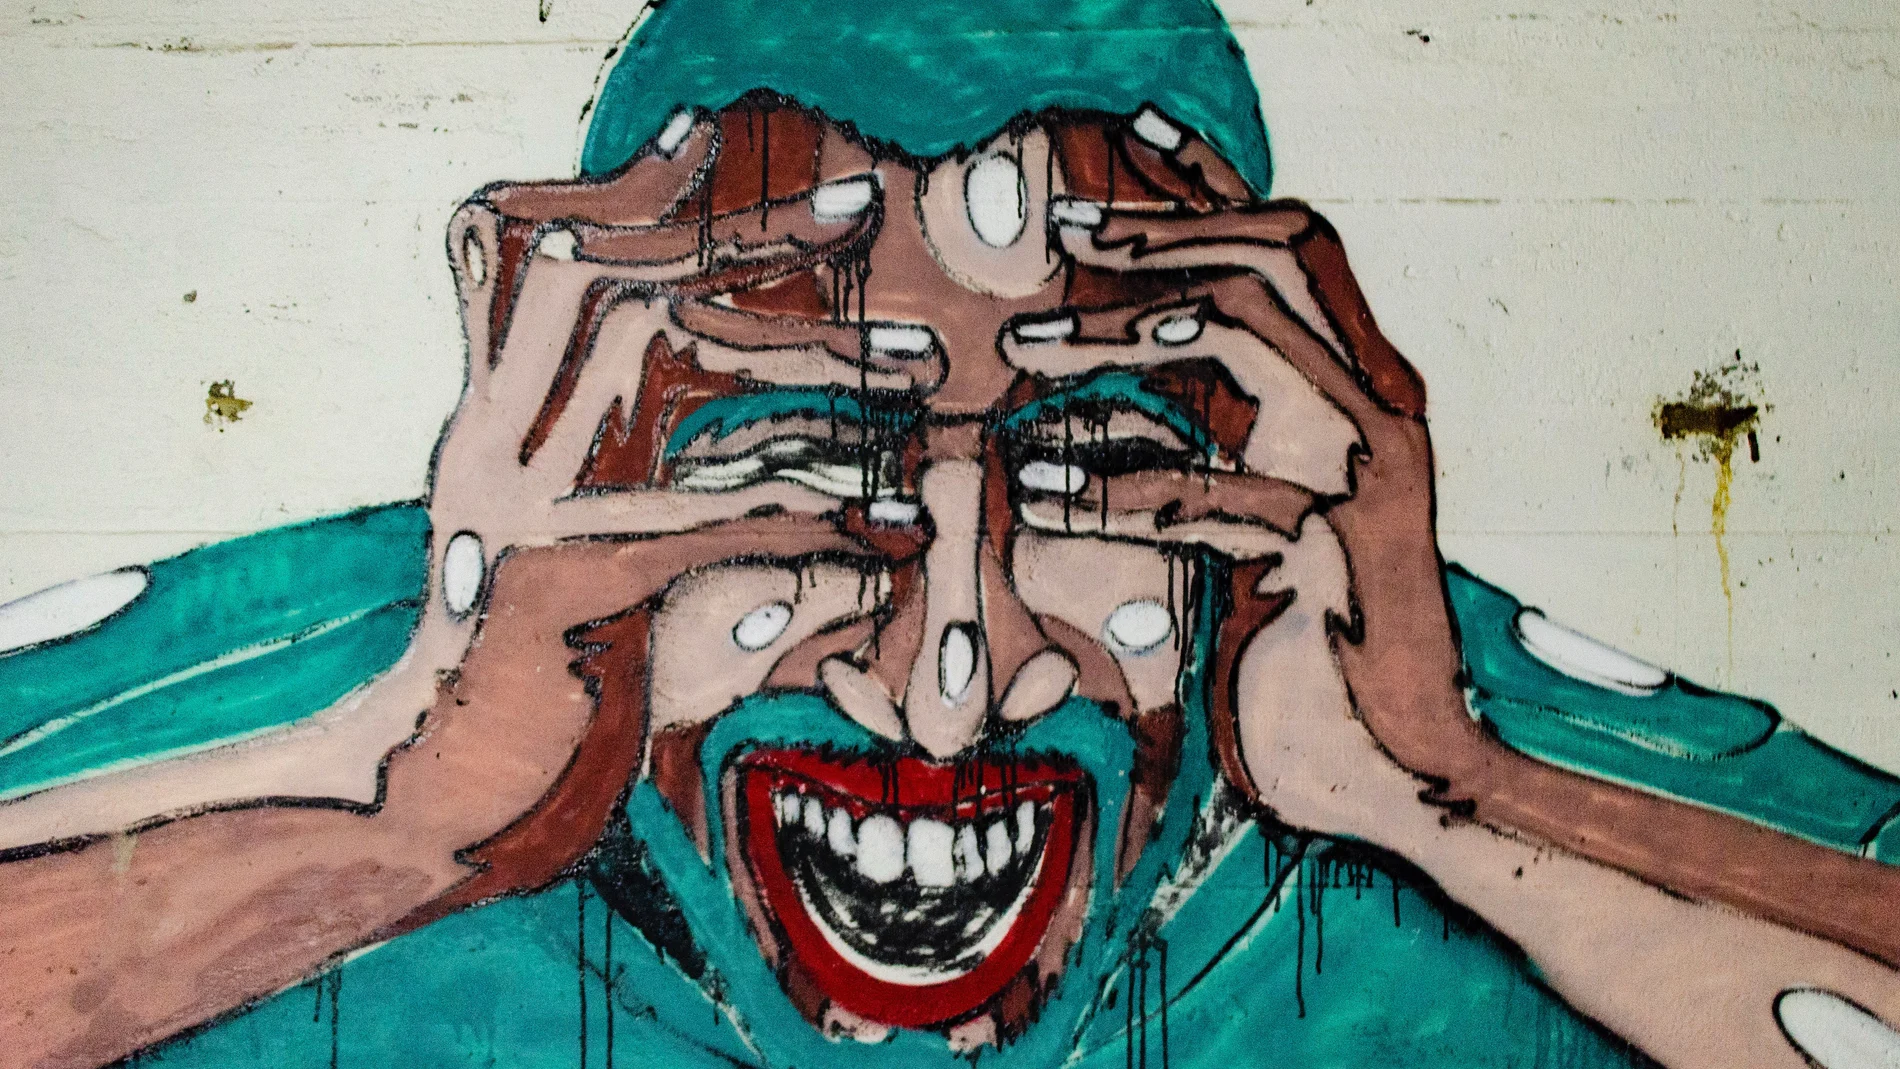 En la imagen, un graffiti que representa el dolor de cabeza.